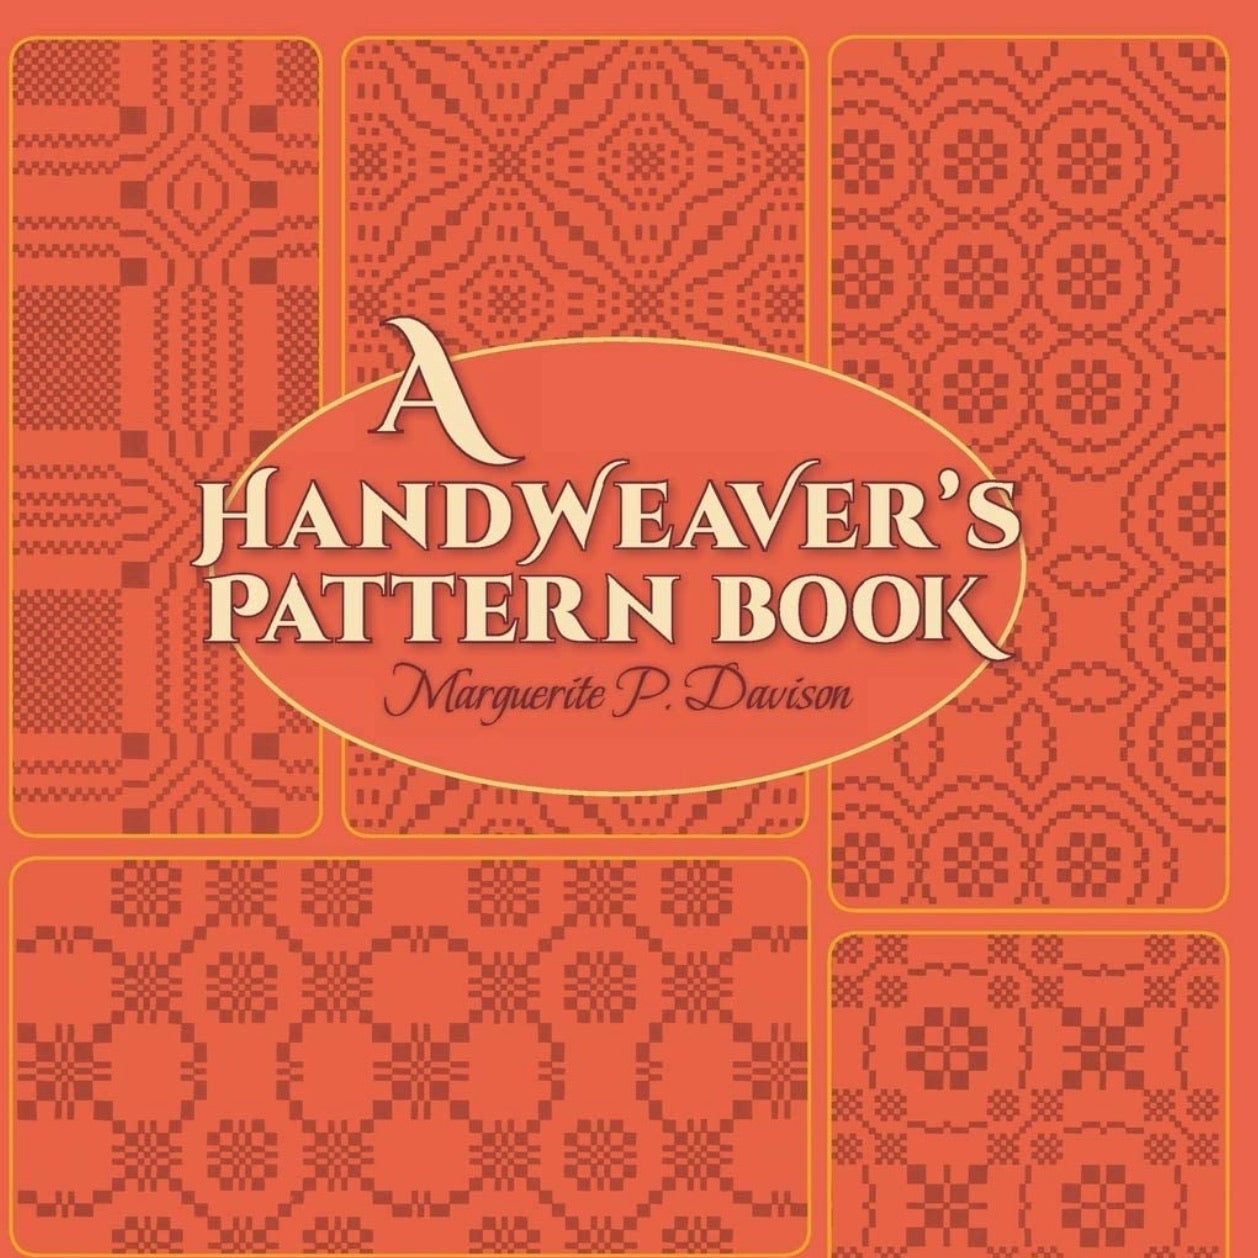 A Handweaver's Pattern Book by Margaret Porter Davidson